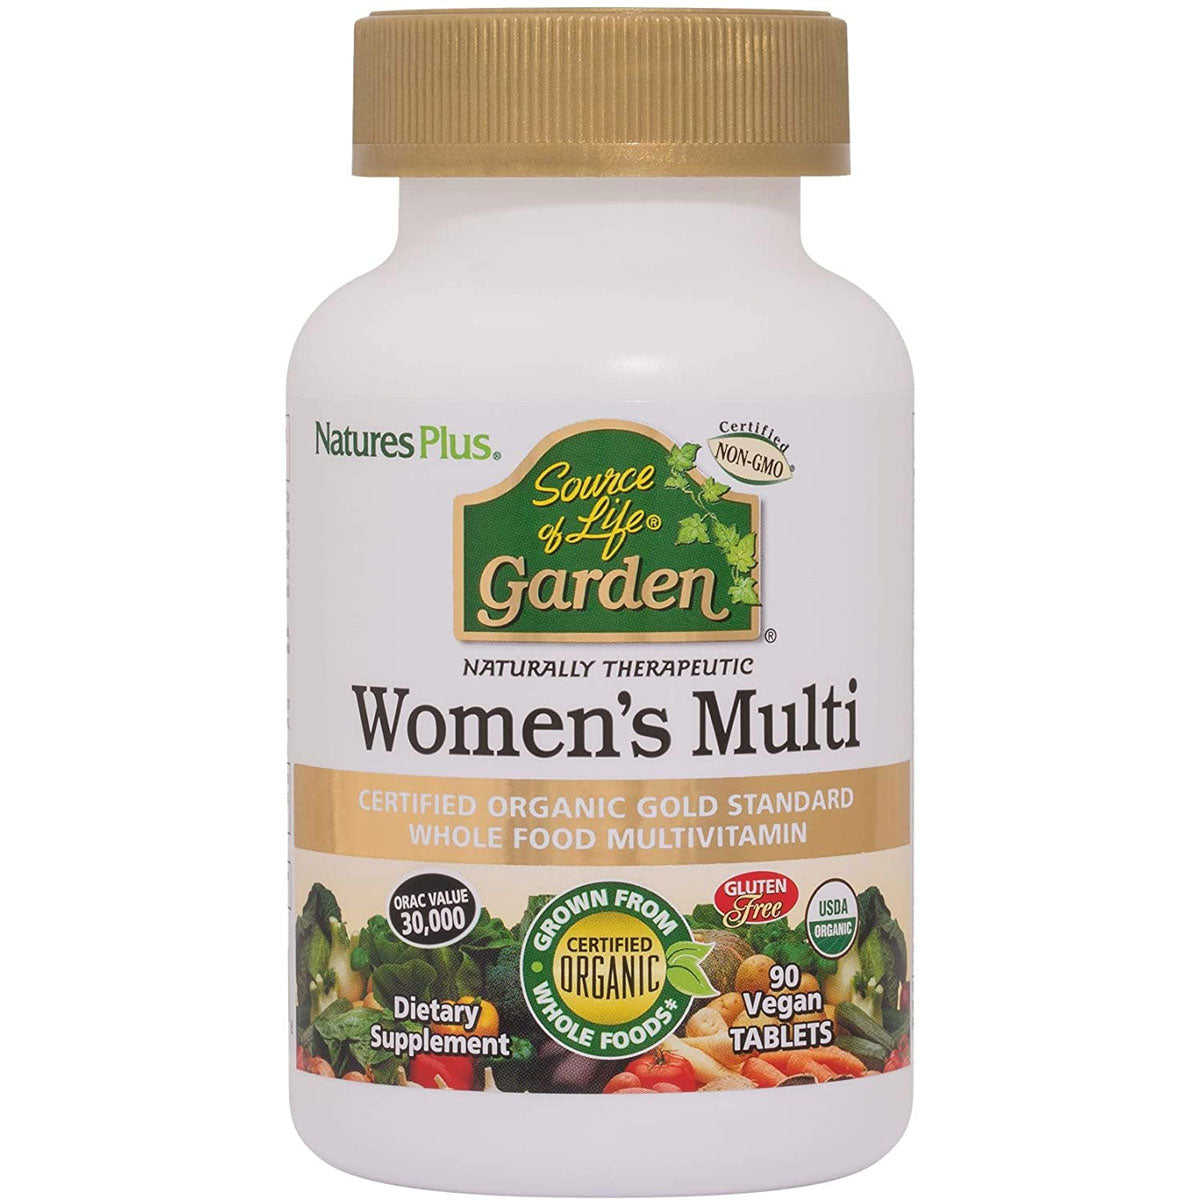 NaturesPlus Source Of Life Garden Organic Women's Multi 90 Vegan Tablets